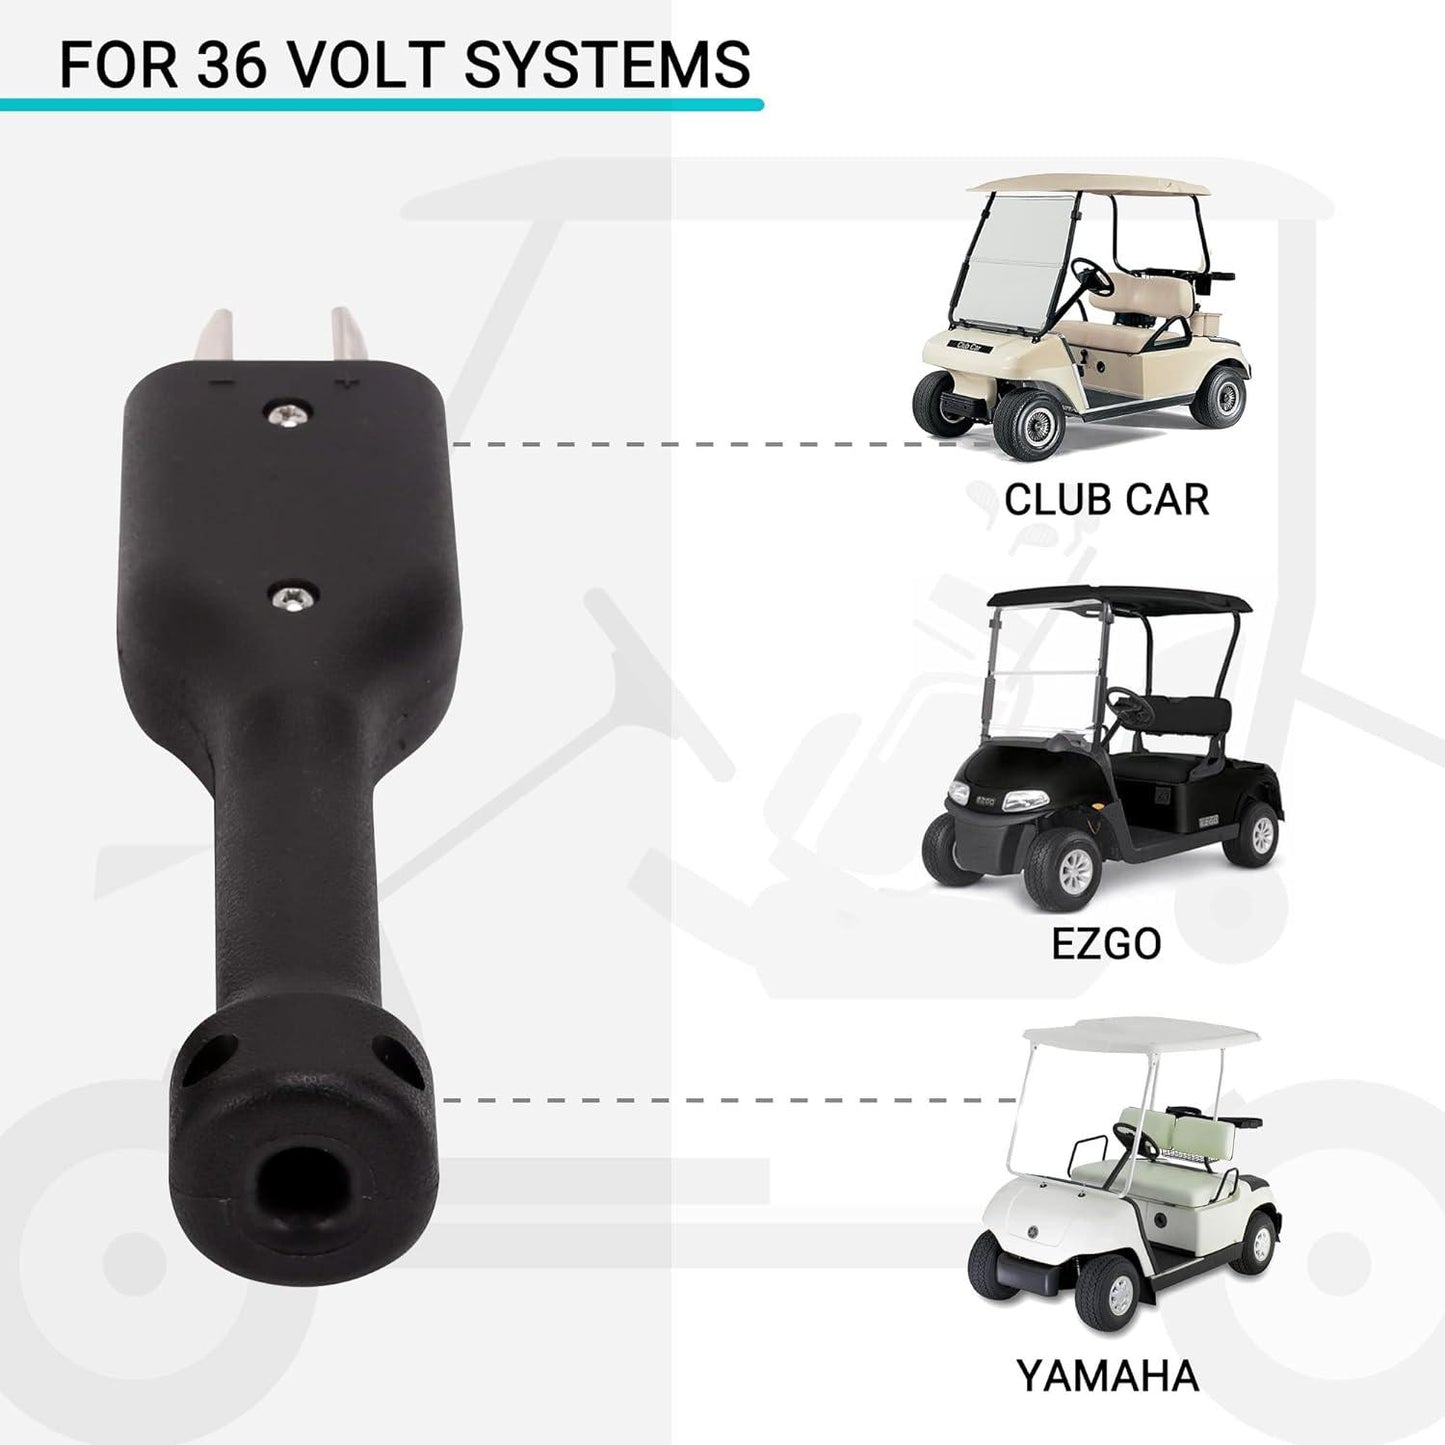 36V golf cart charger plug is suitable for EZGO, Yamaha, Club Car electric - 10L0L Kryptex Golf Carts